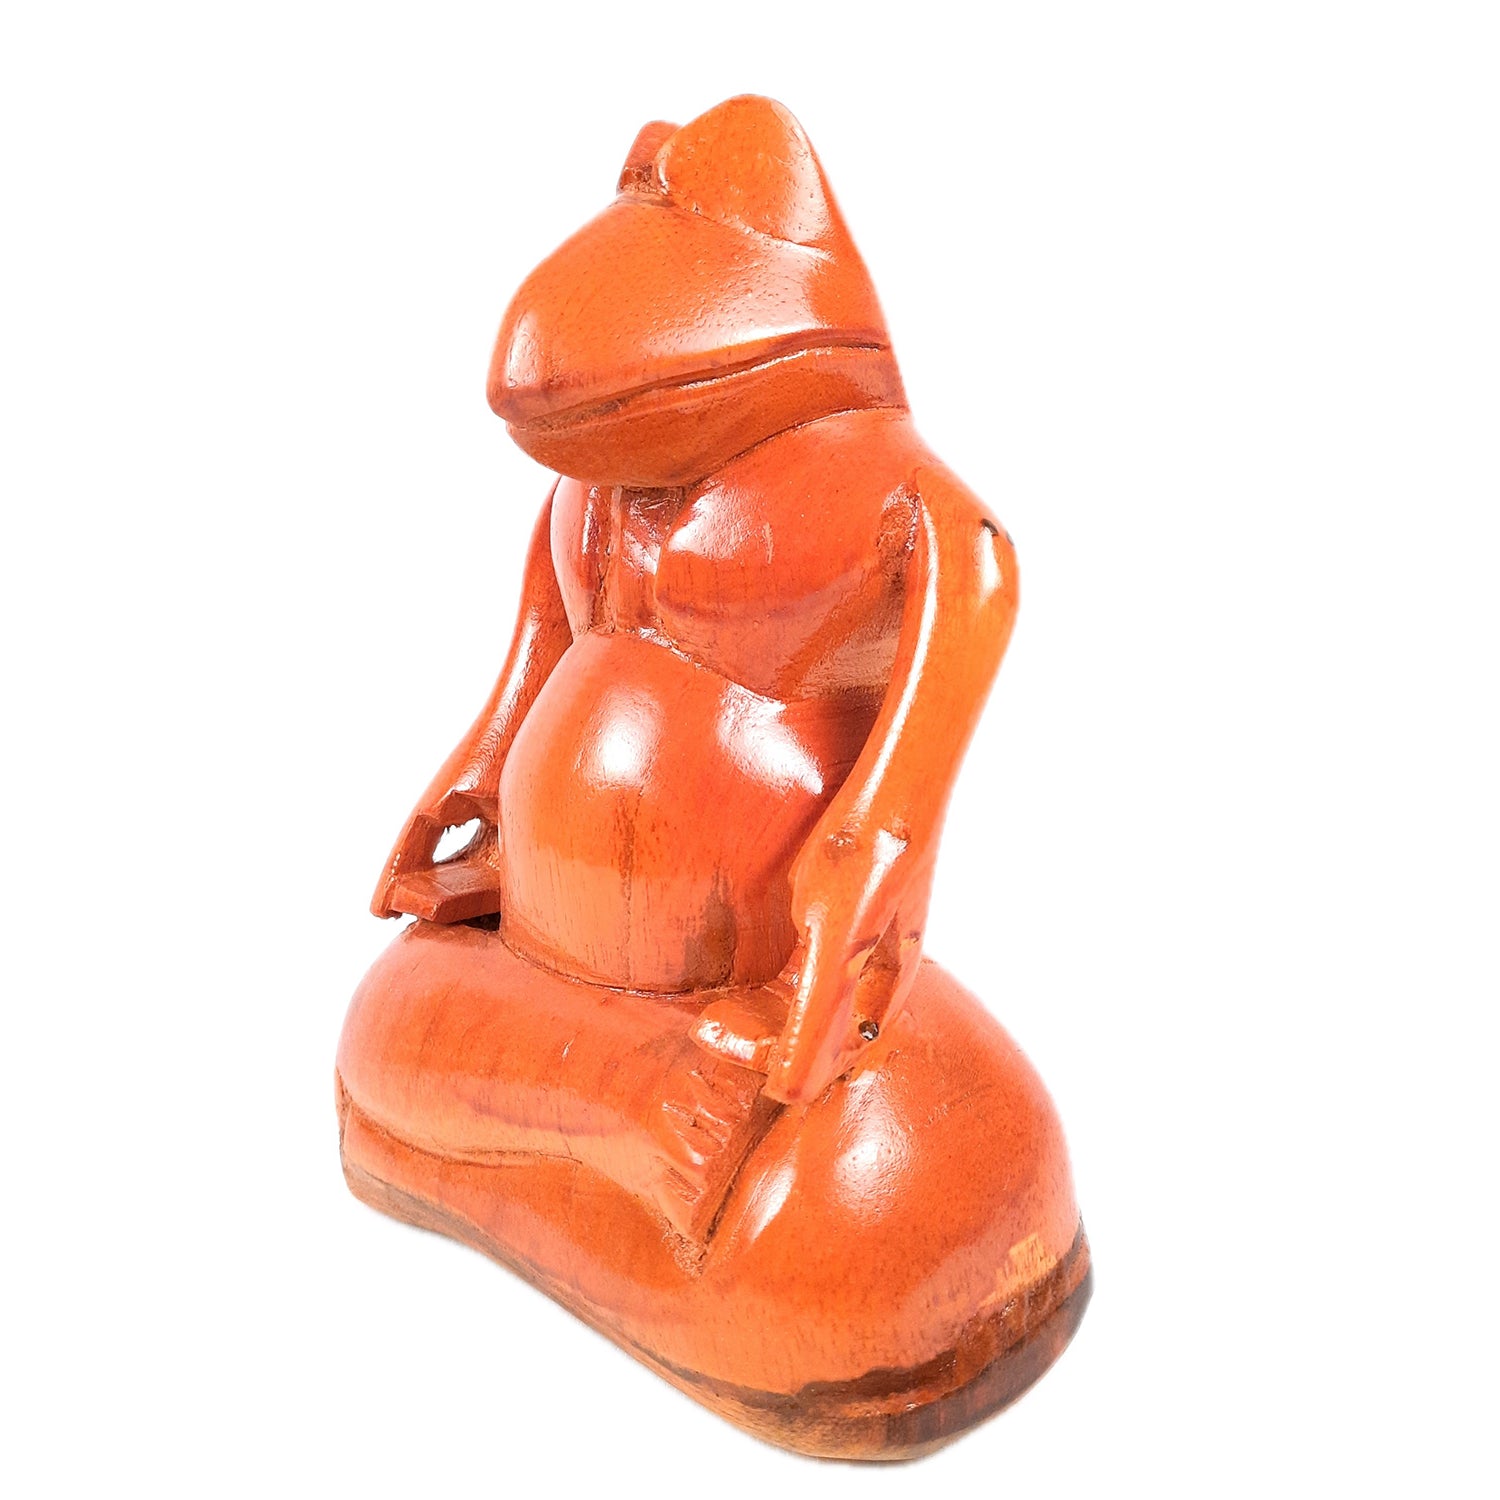 Meditating Frog Showpiece | wooden Animal Figurines - For Home, Table, Living Room, Office Desk Decor & Gifts - 10 Inch - Apkamart